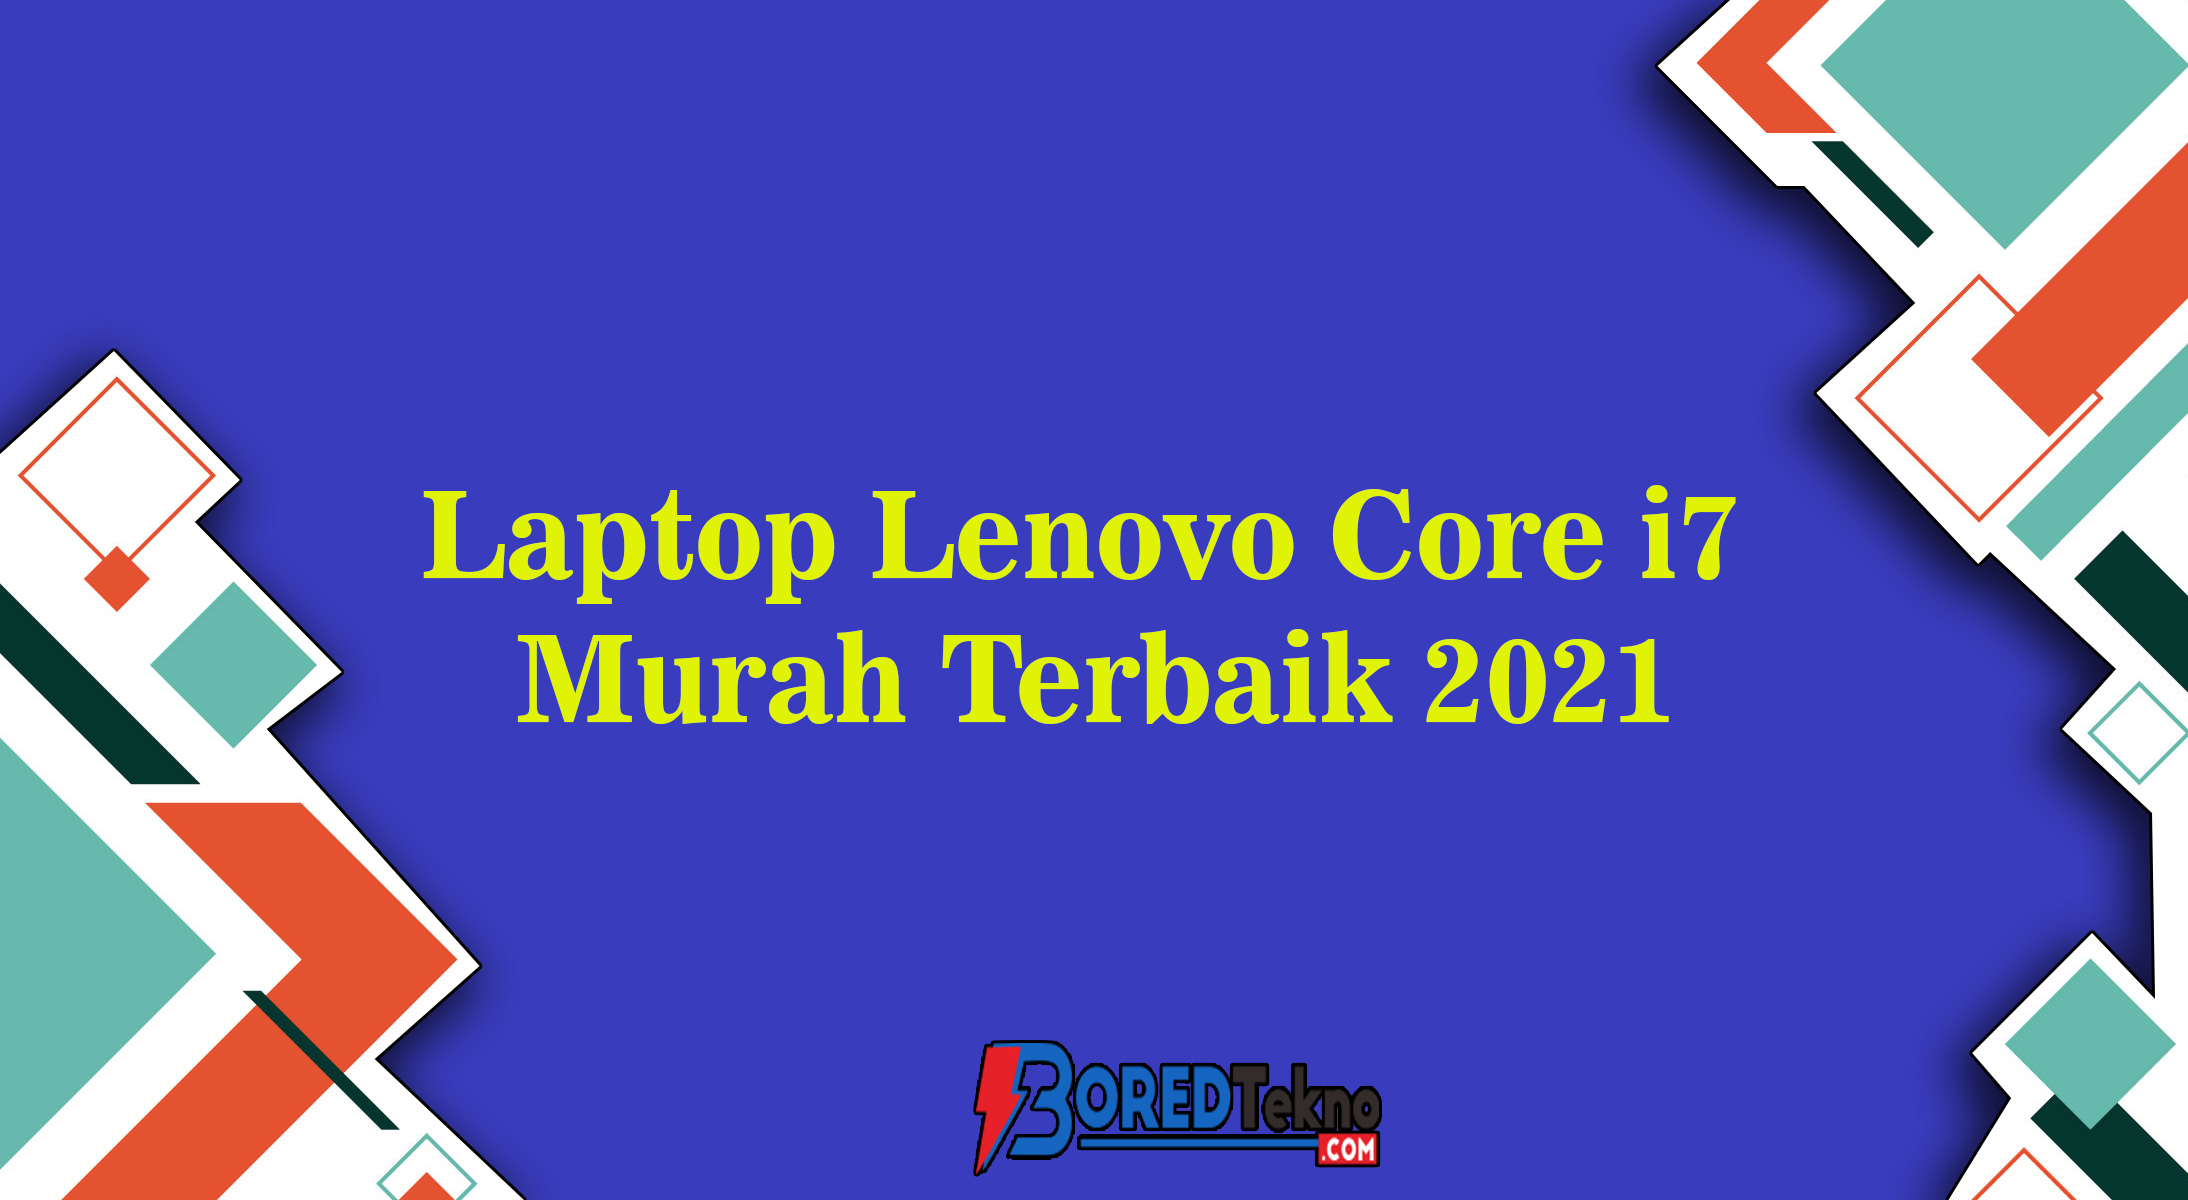 Laptop Lenovo Core i7 Murah Terbaik 2021